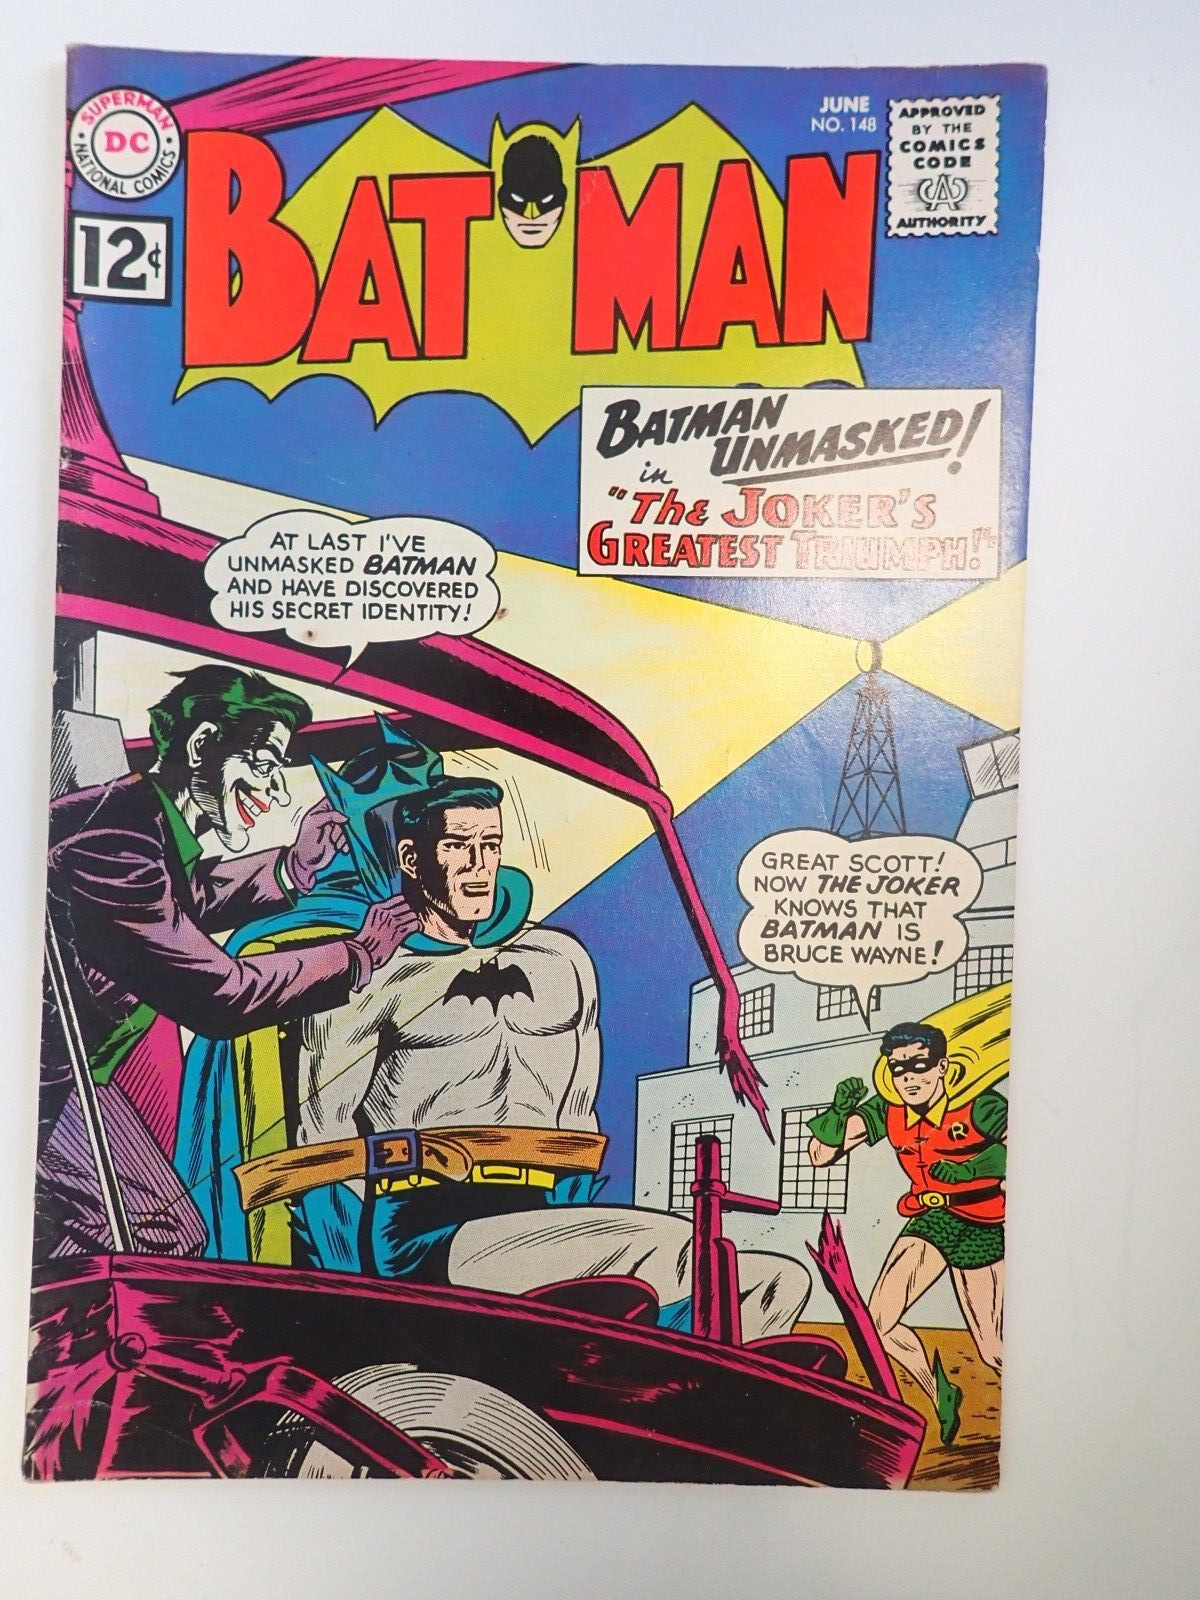 1962 Batman # 148 Super Nice DC Silver Age Comic Book Featuring Joker Cover